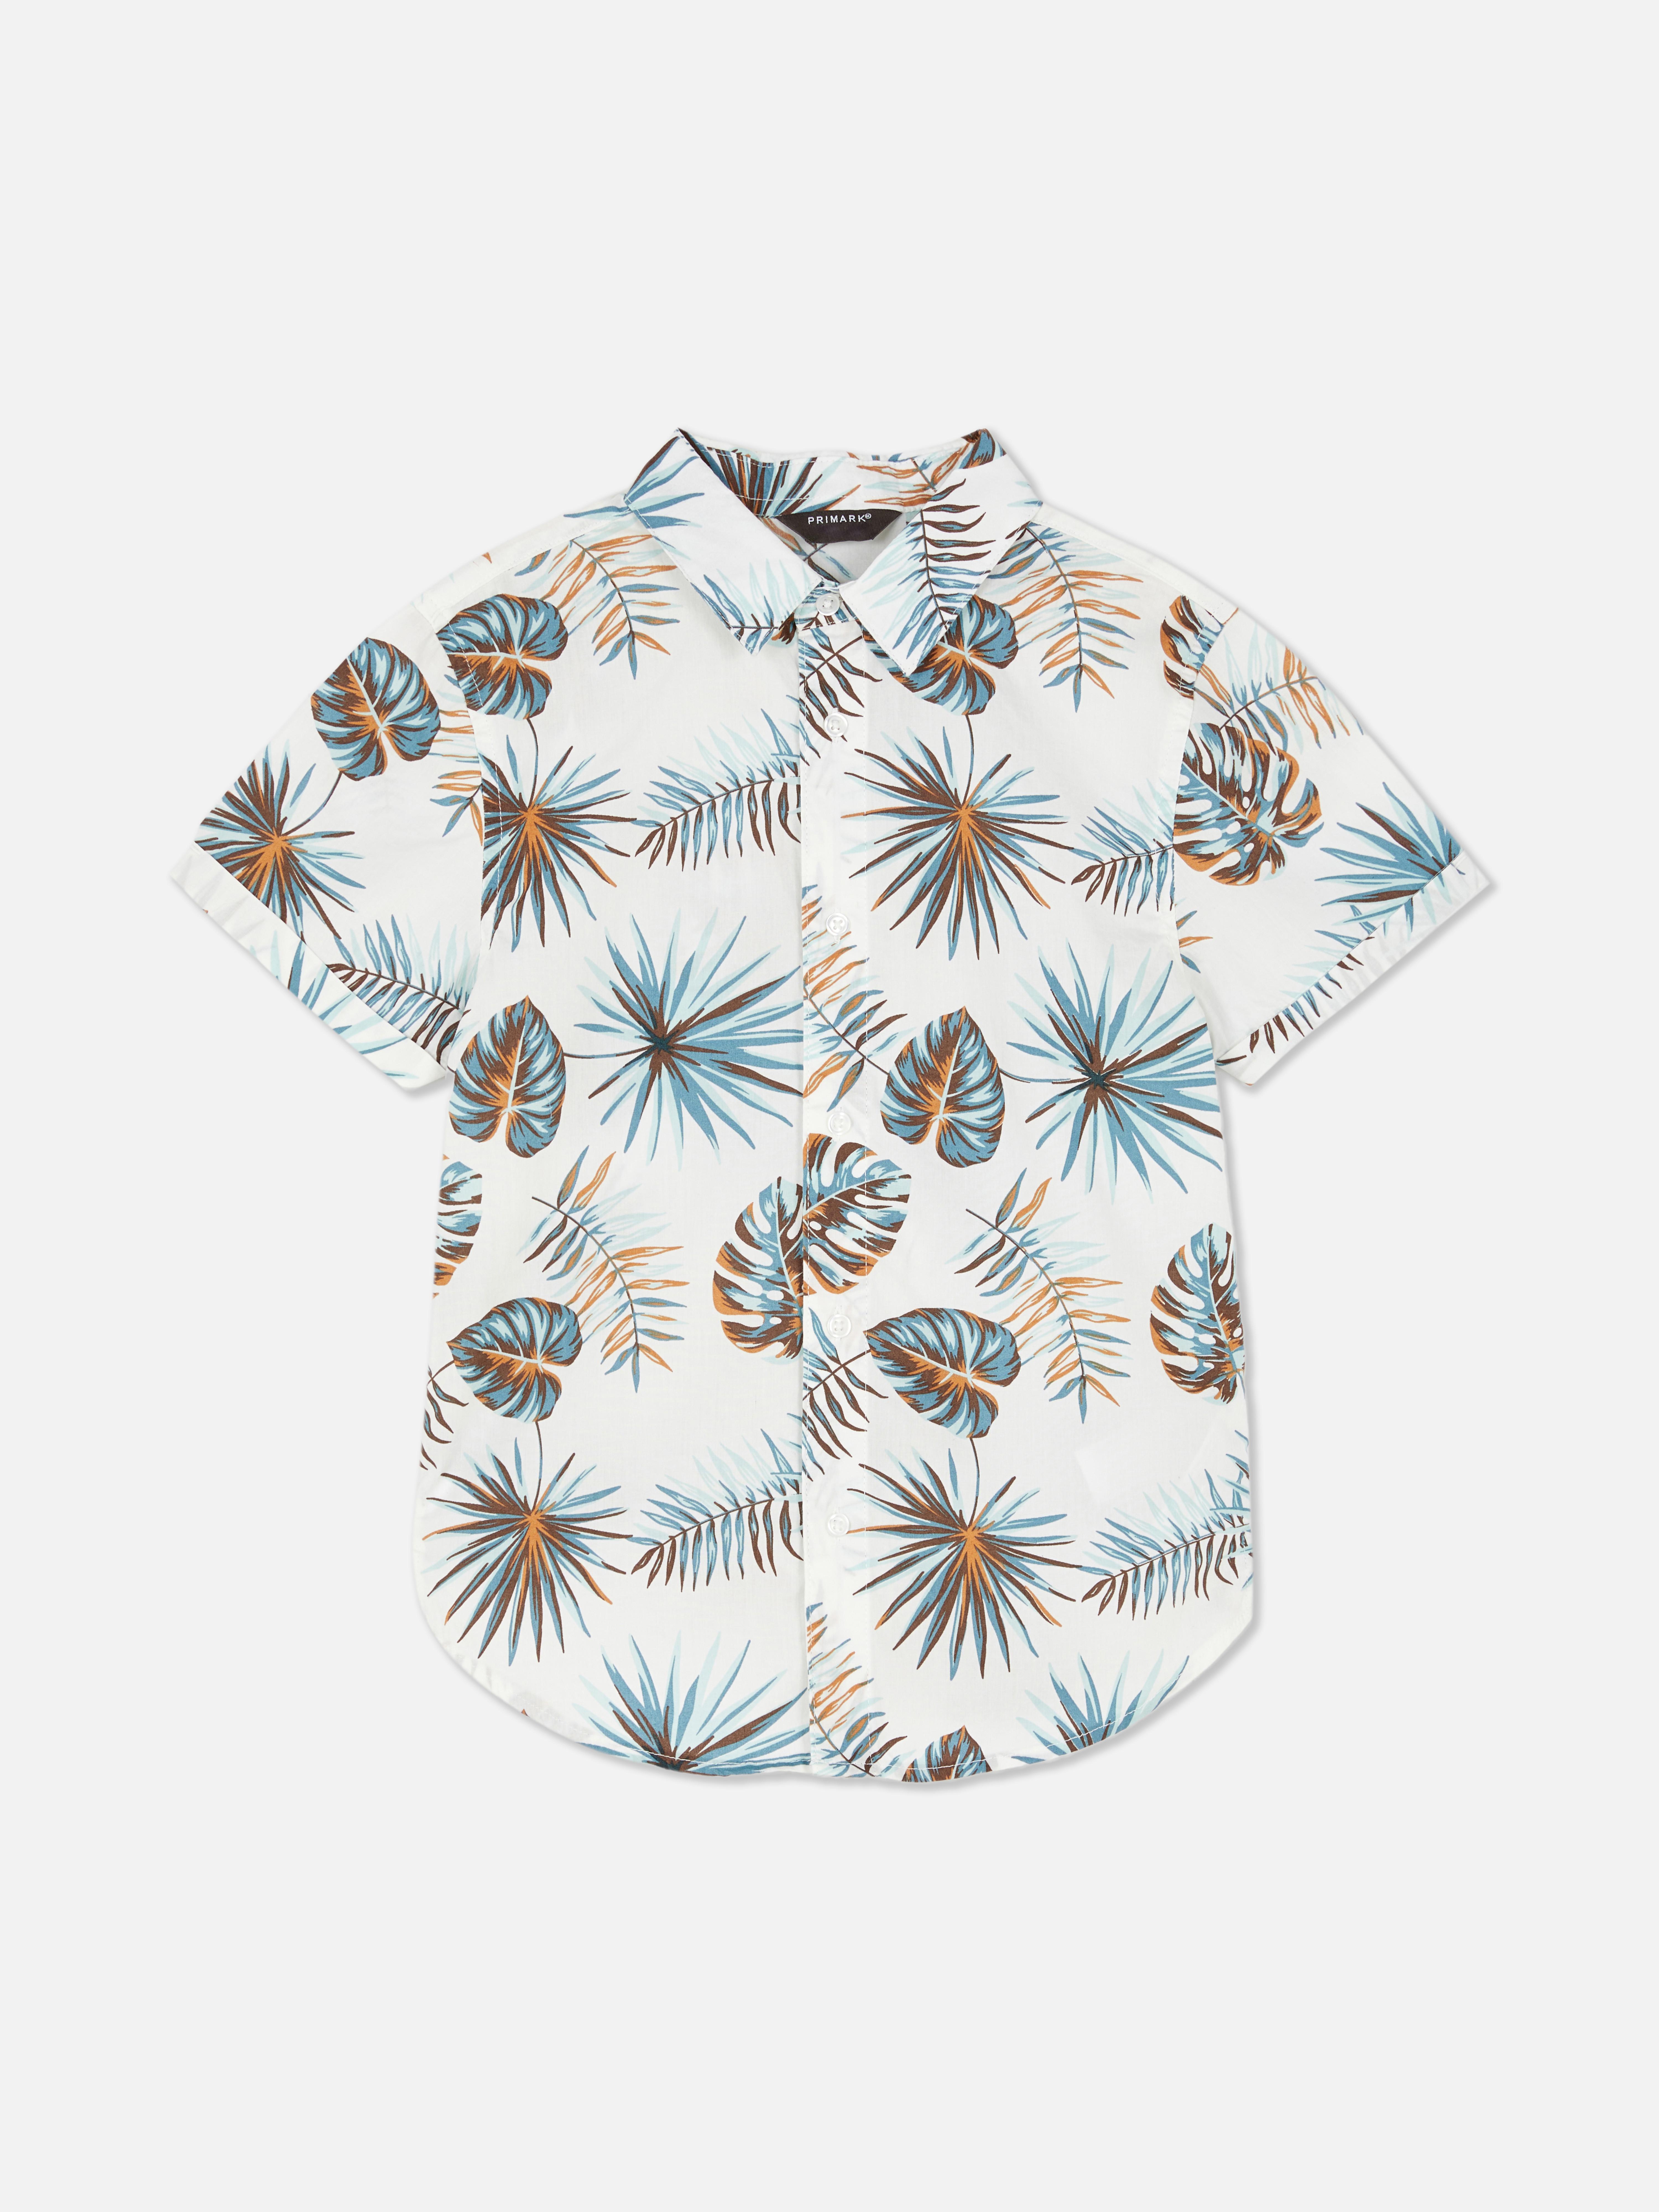 Palm Leaf Shirt